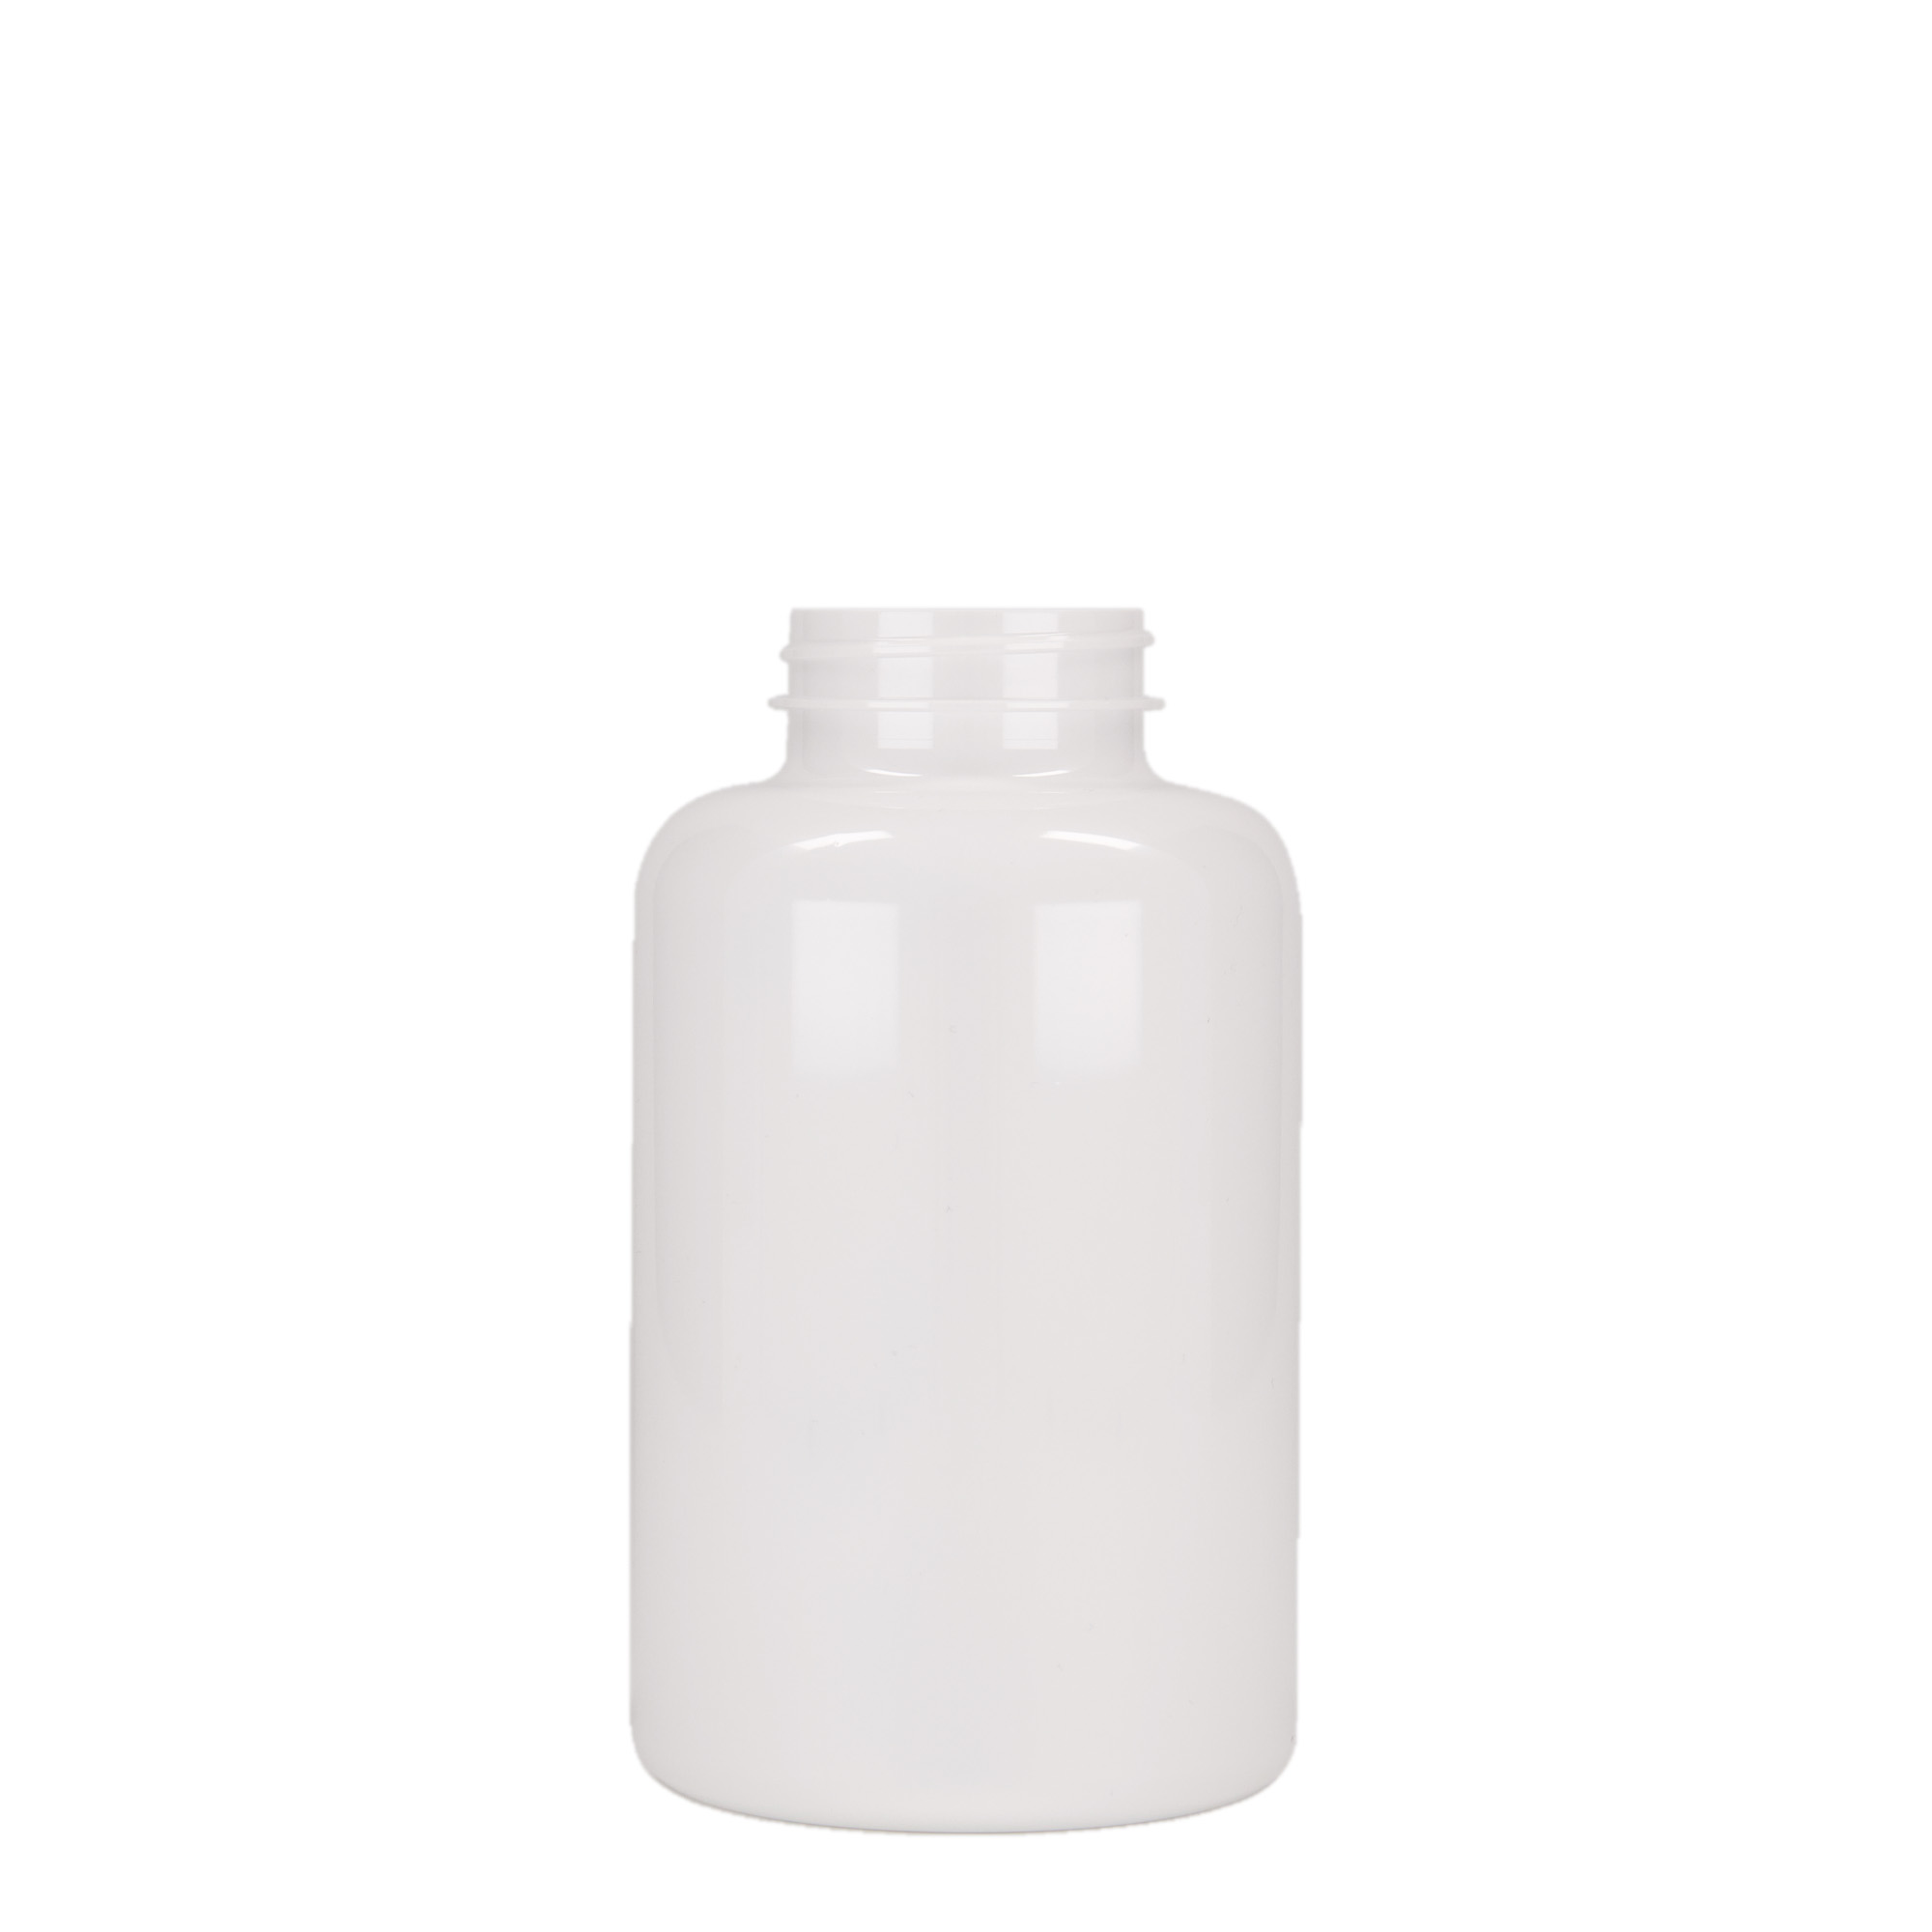 Packer en PET 500 ml, plastique, blanc, bouchage: GPI 45/400